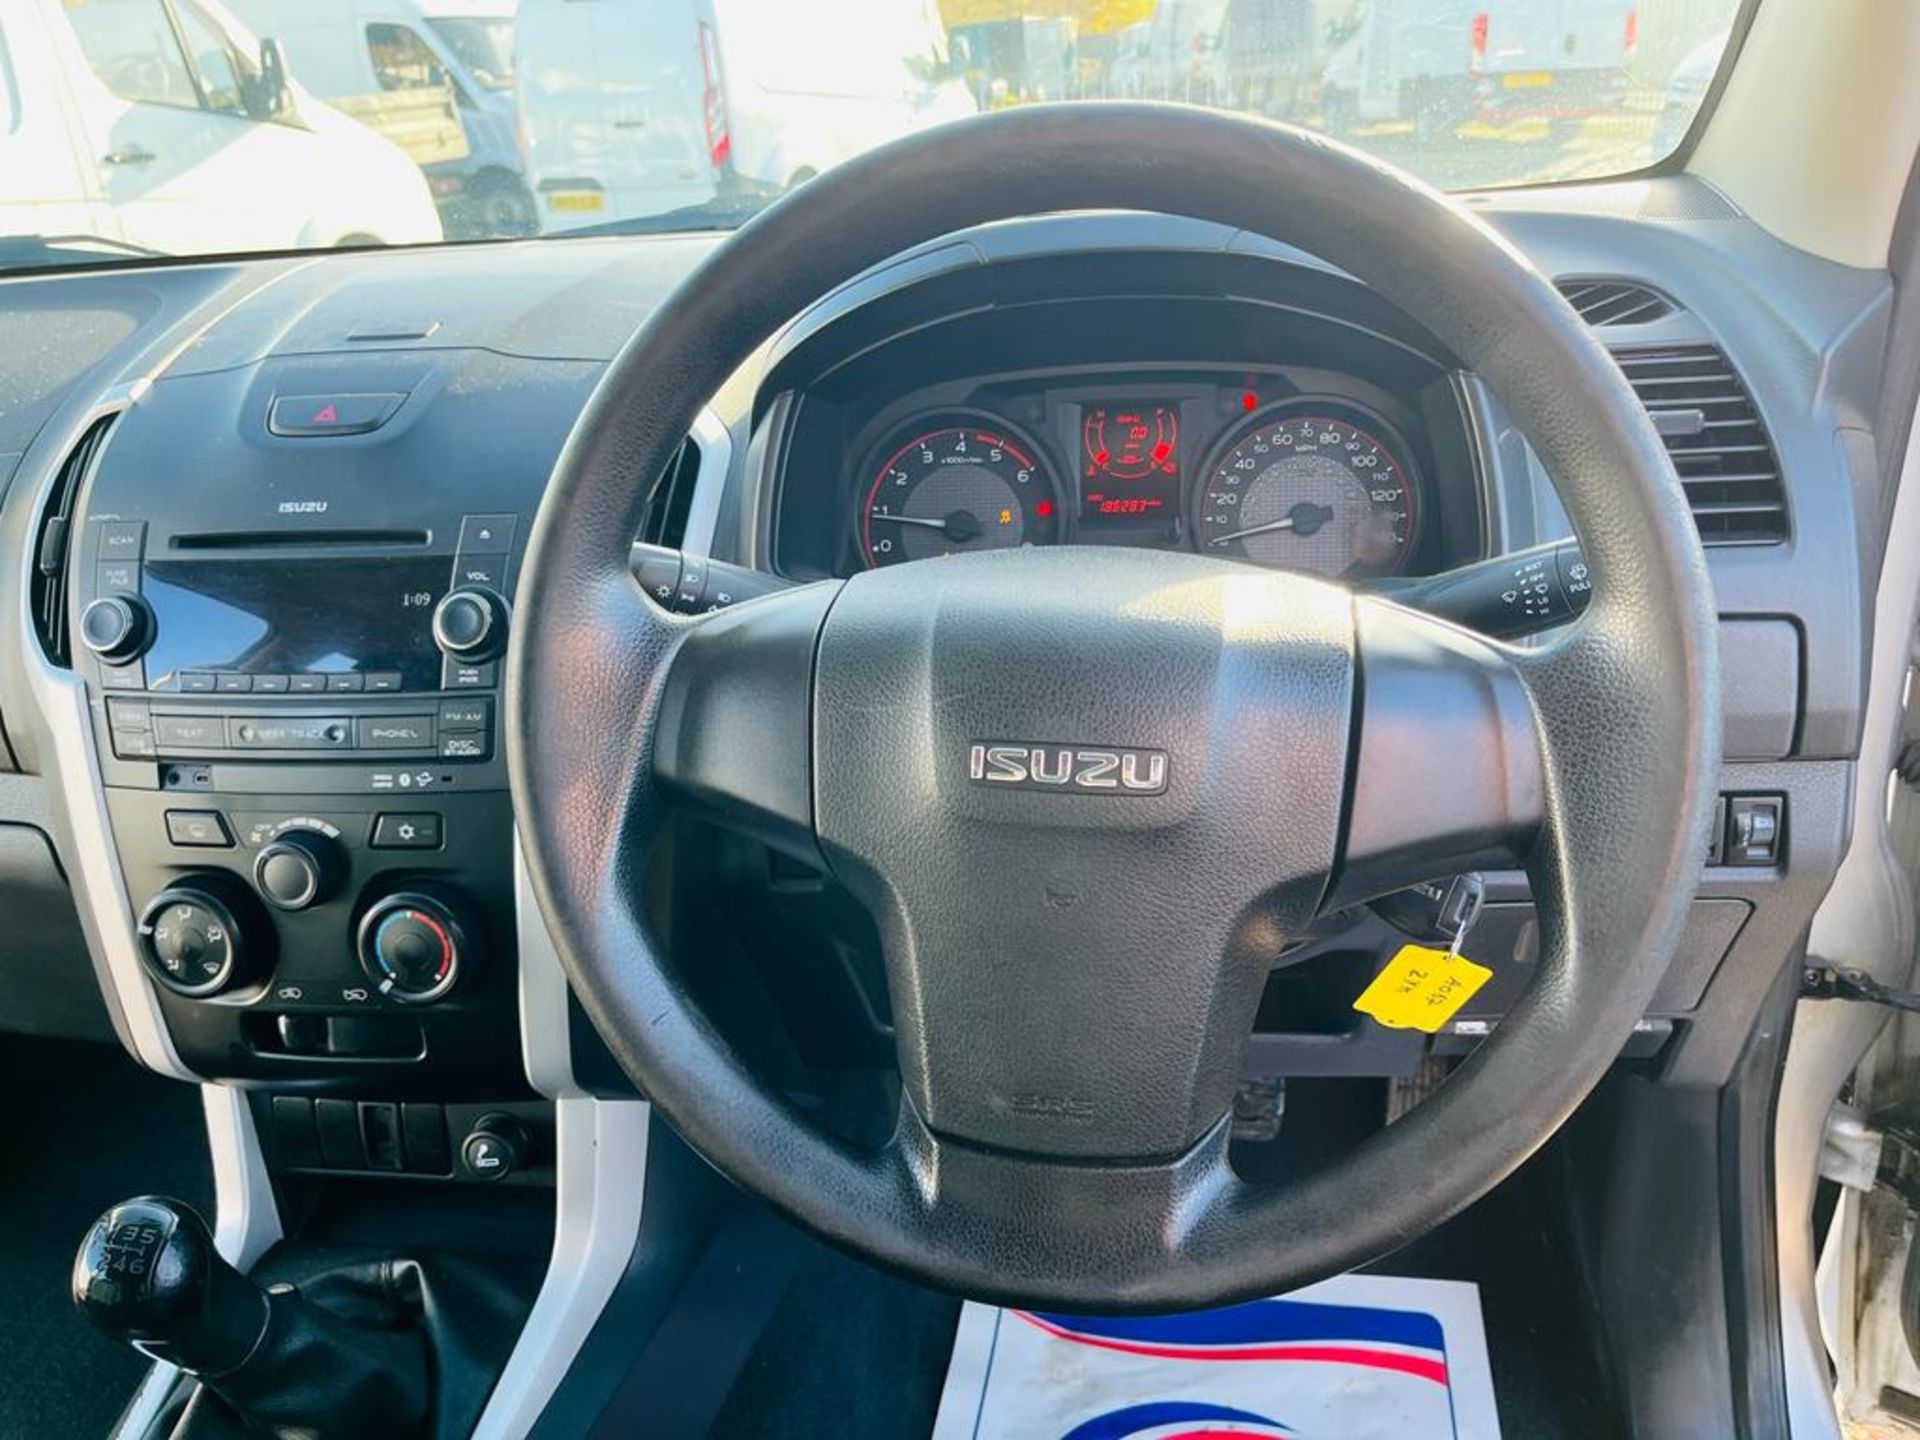 ** ON SALE ** Isuzu D-Max 1.9 TD 160 Eiger 4WD CrewCab Pickup 2018 '67 Reg' A/C - ULEZ Compliant - Image 23 of 32